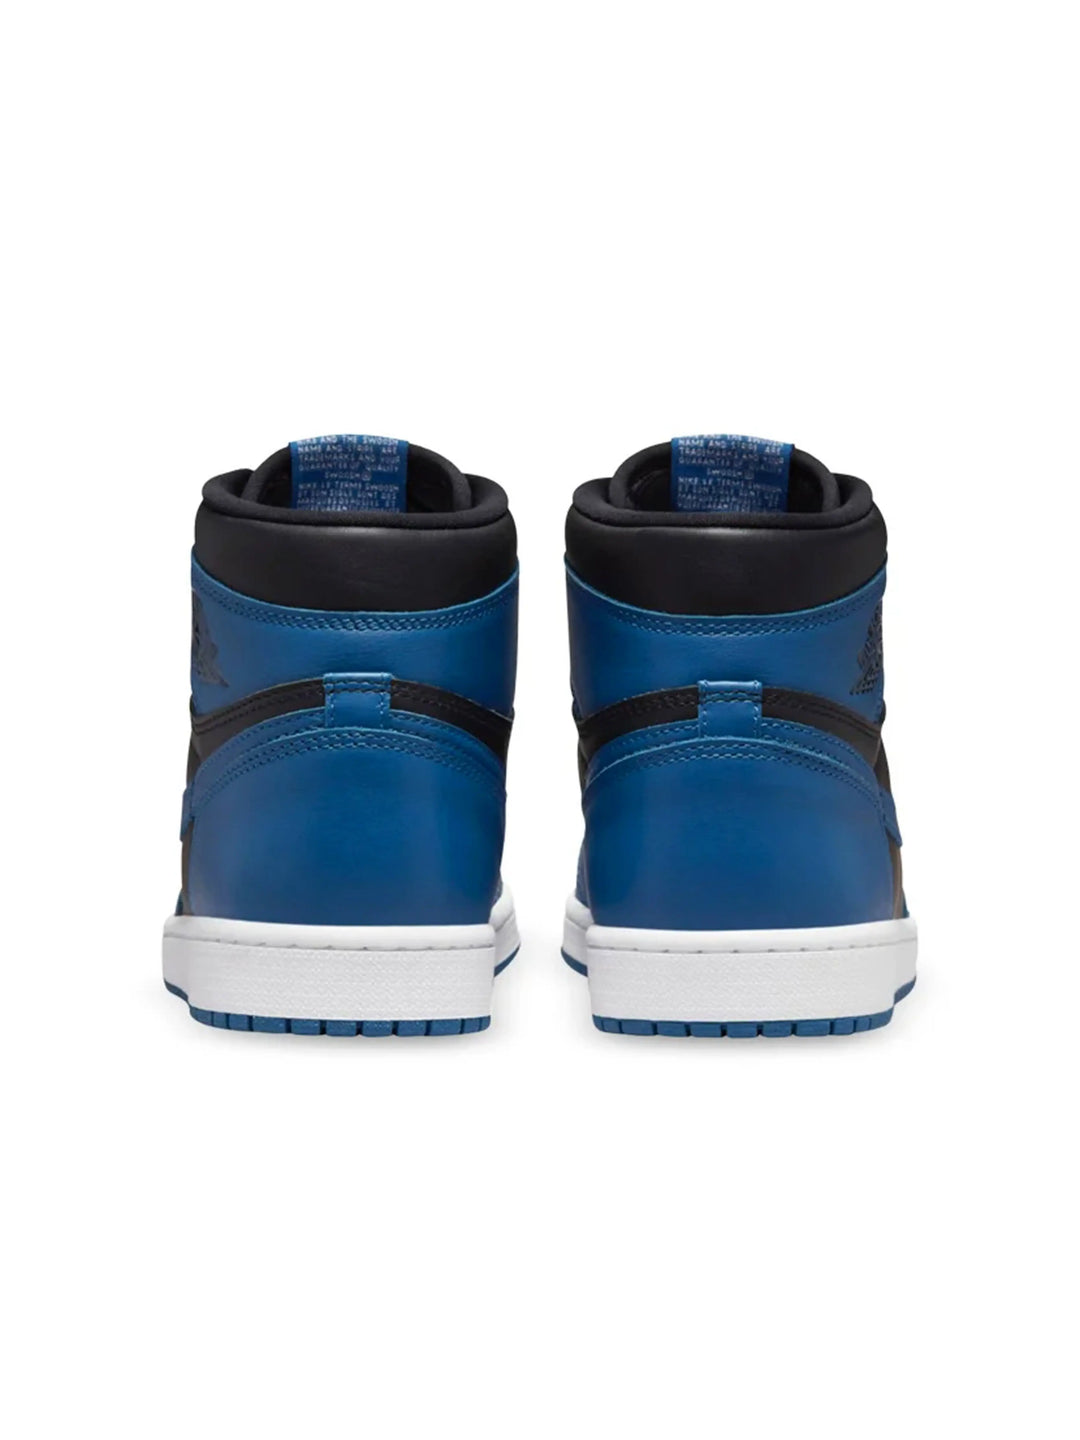 Nike Air Jordan 1 Retro High OG Dark Marina Blue (GS) Jordan Brand